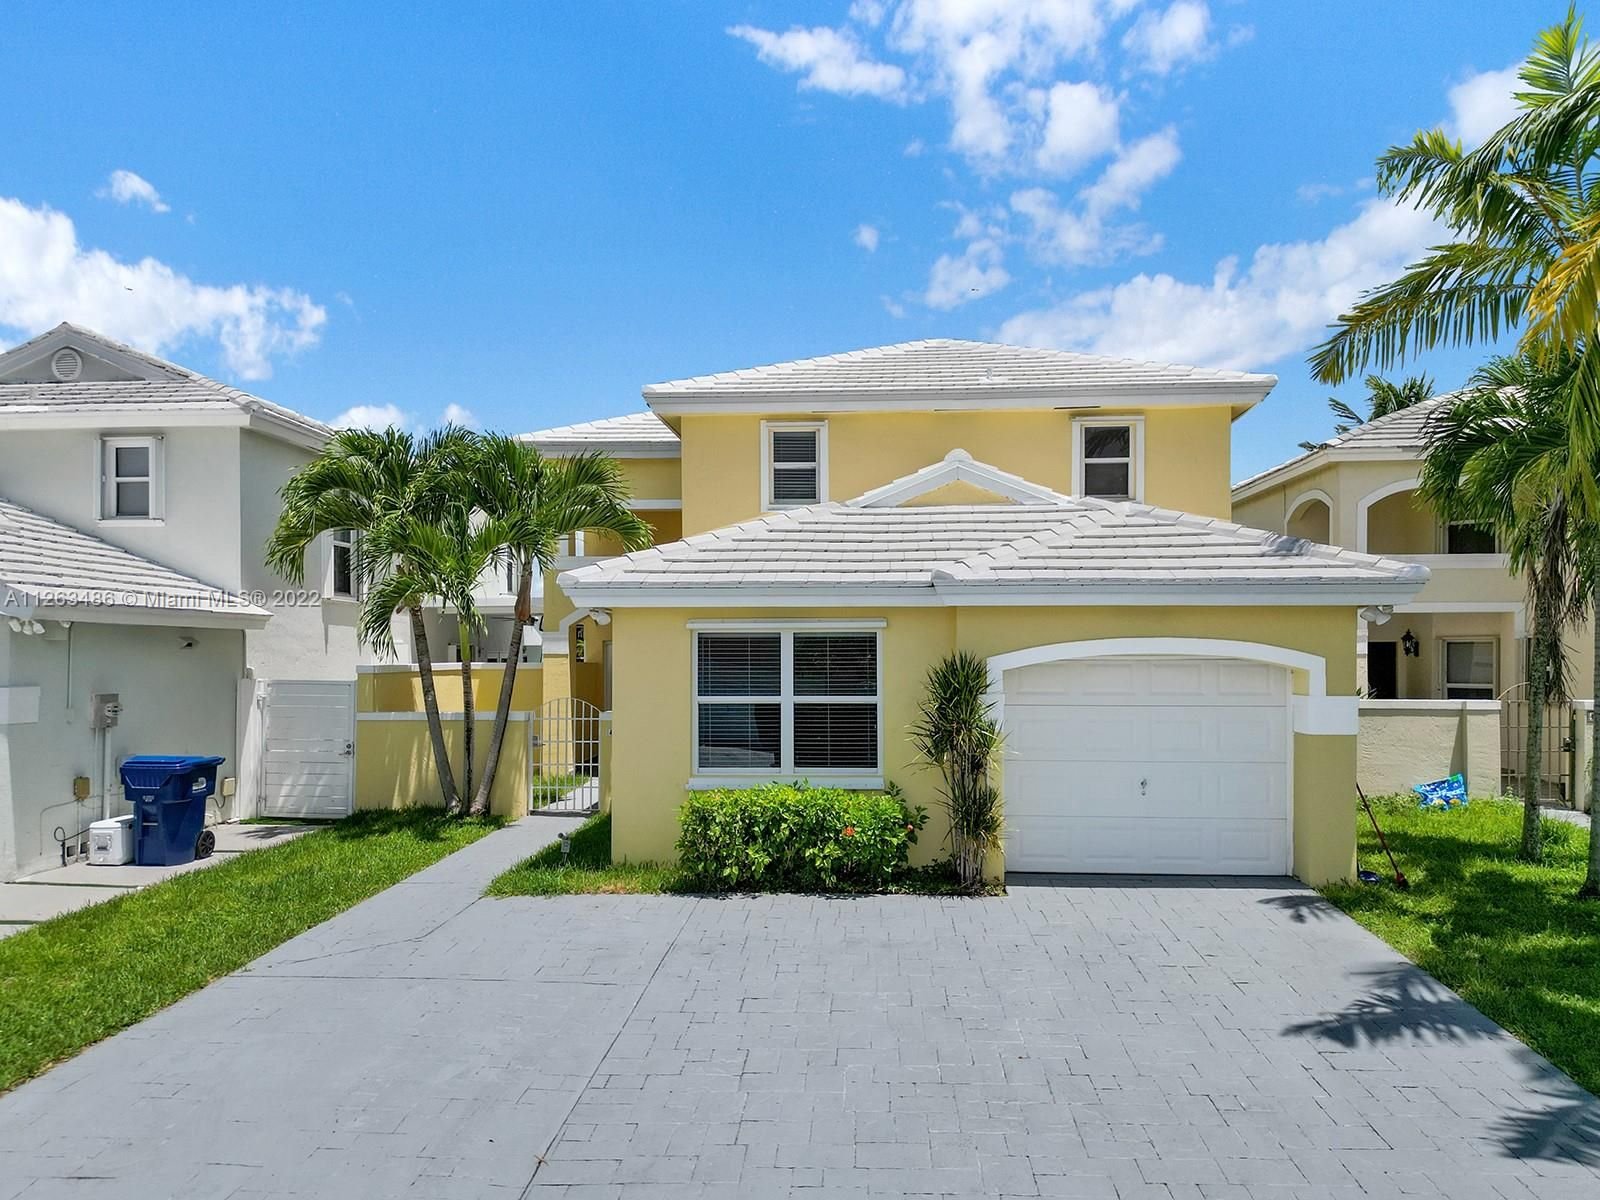 Real estate property located at 4767 154th Ave, Miami-Dade County, Miami, FL